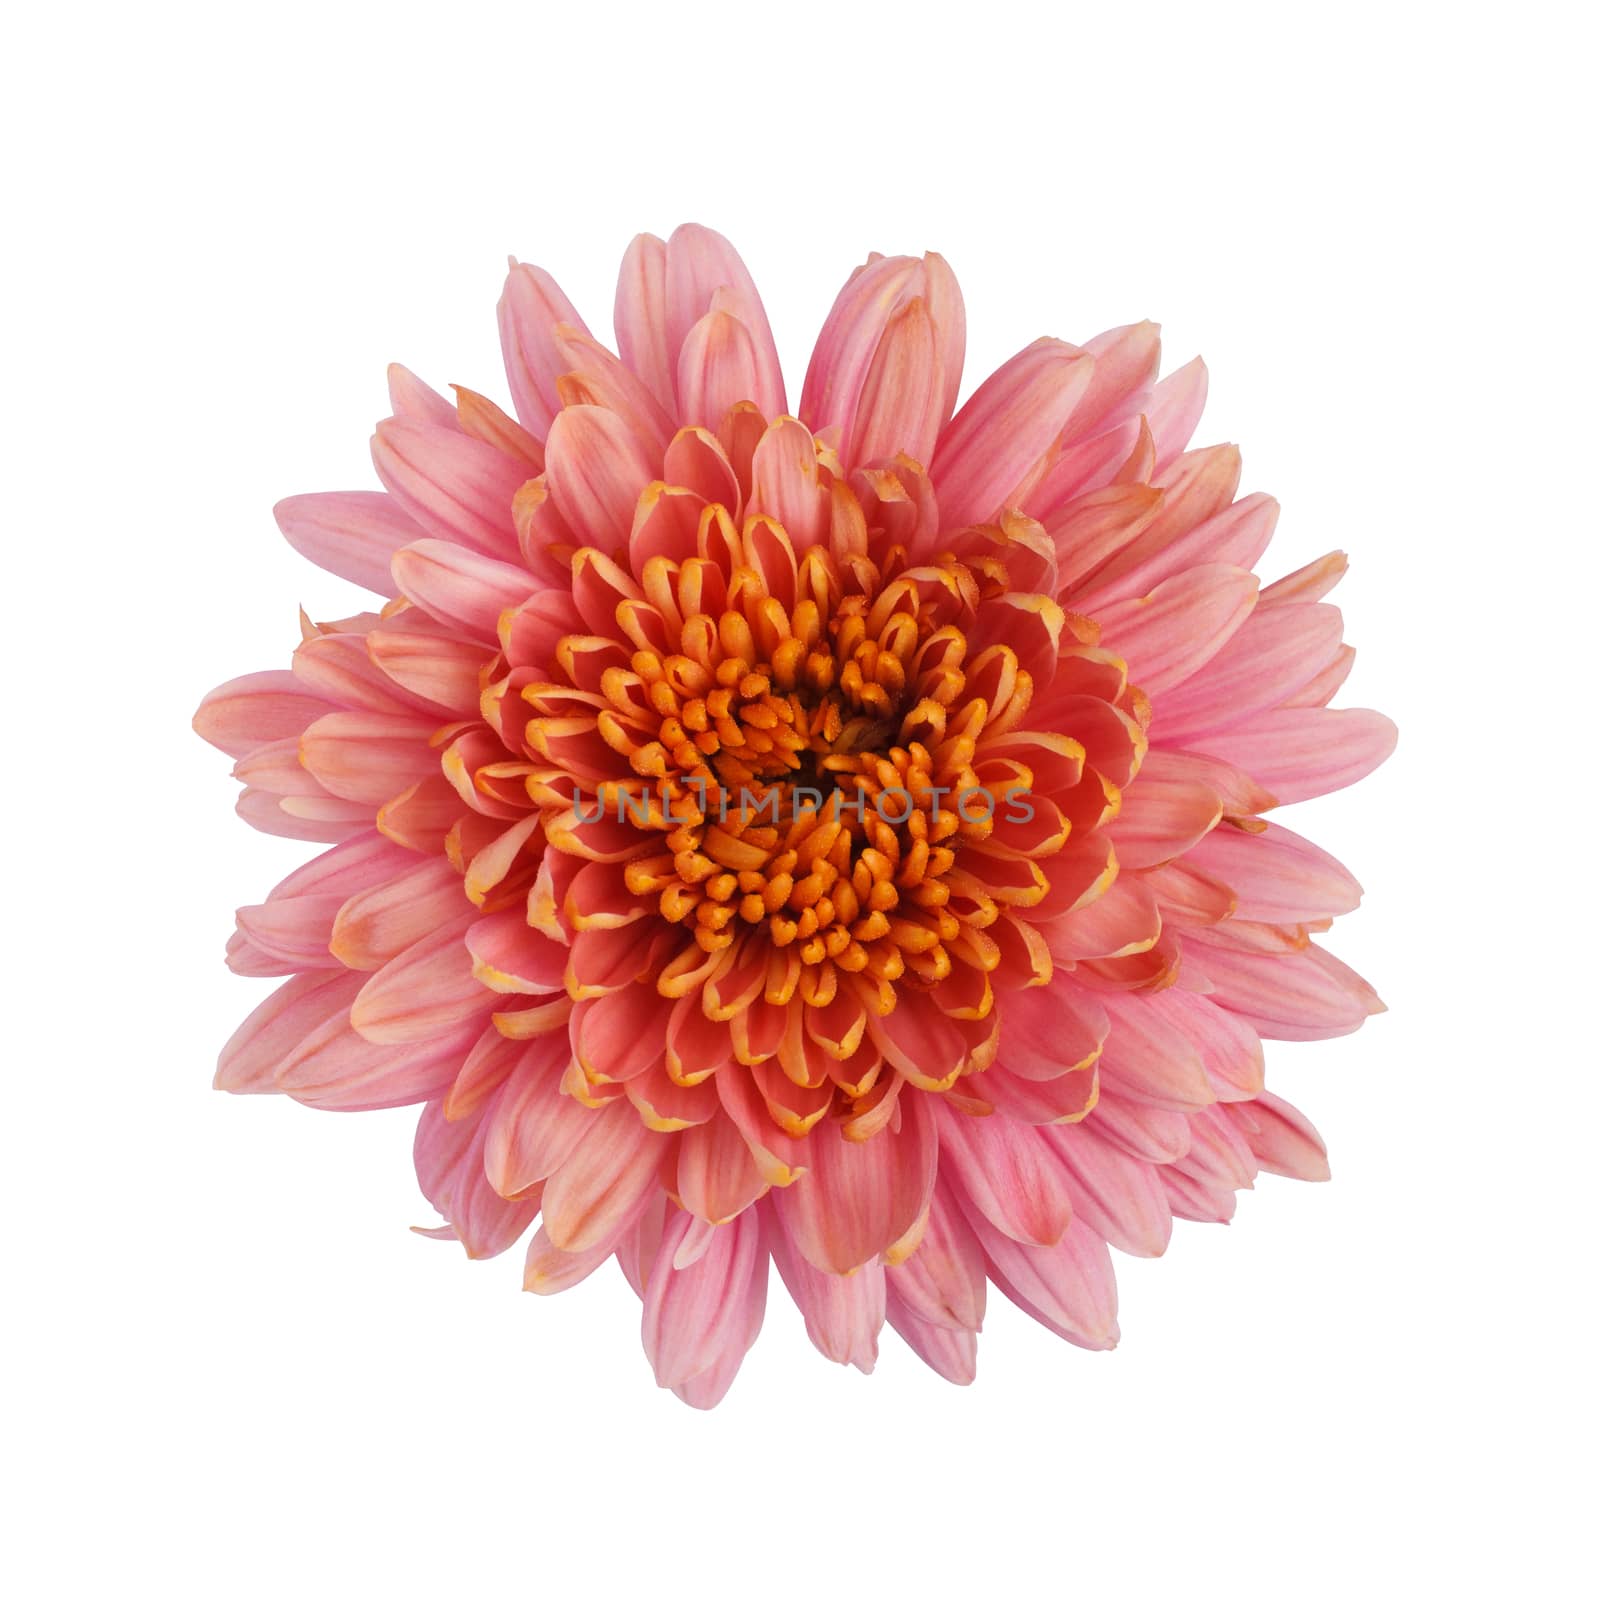 Chrysanthemum flower by serkucher